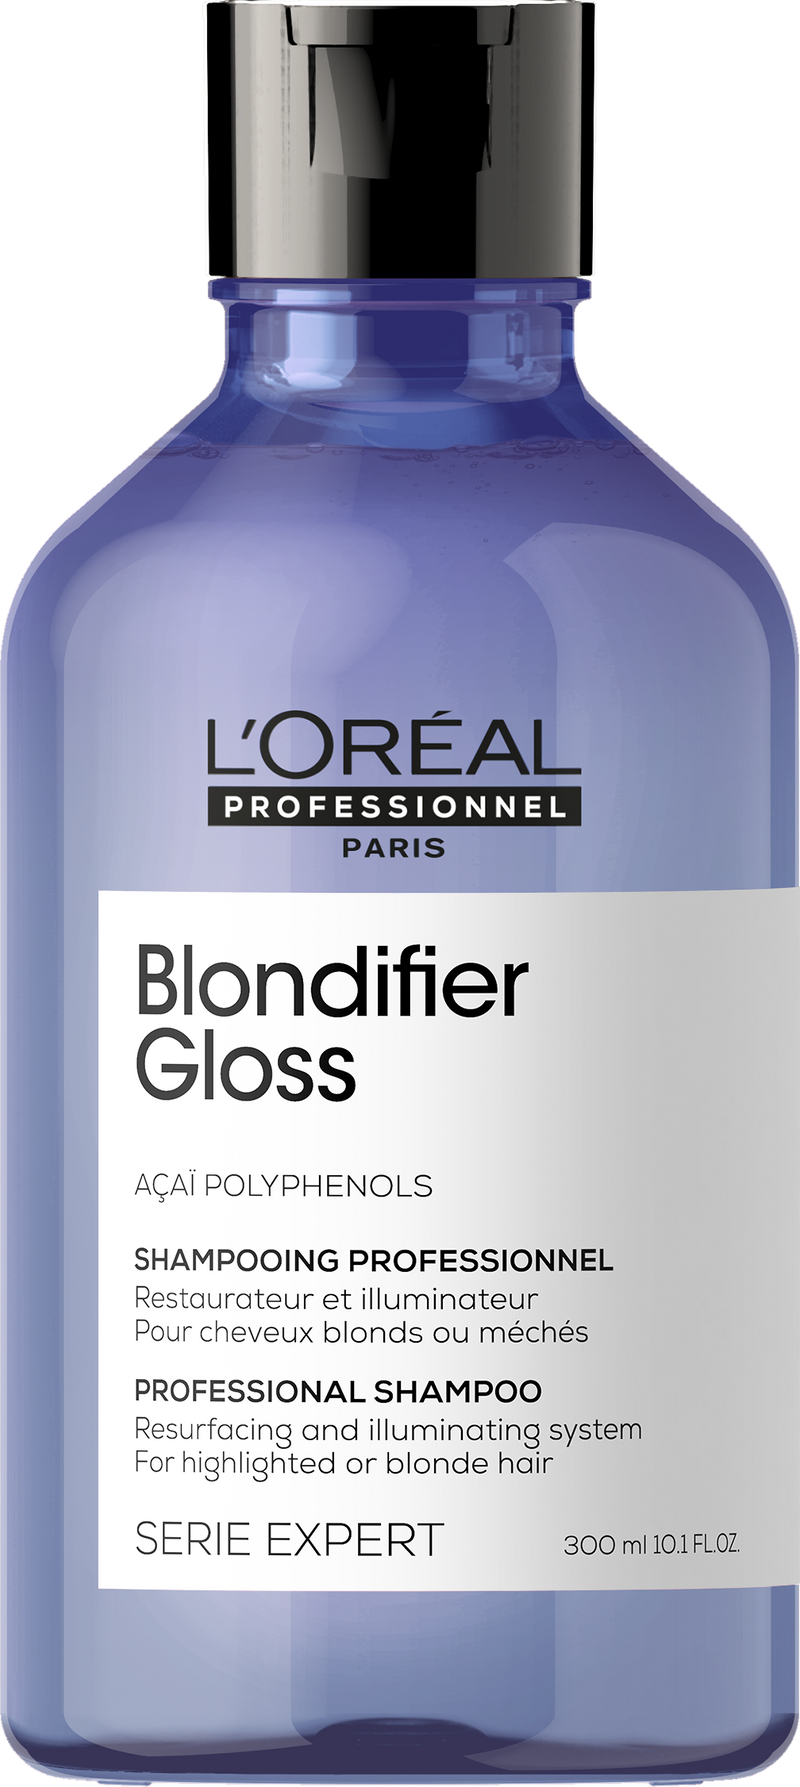 Shampoo Blondfier Gloos Serie Expert x 300ml